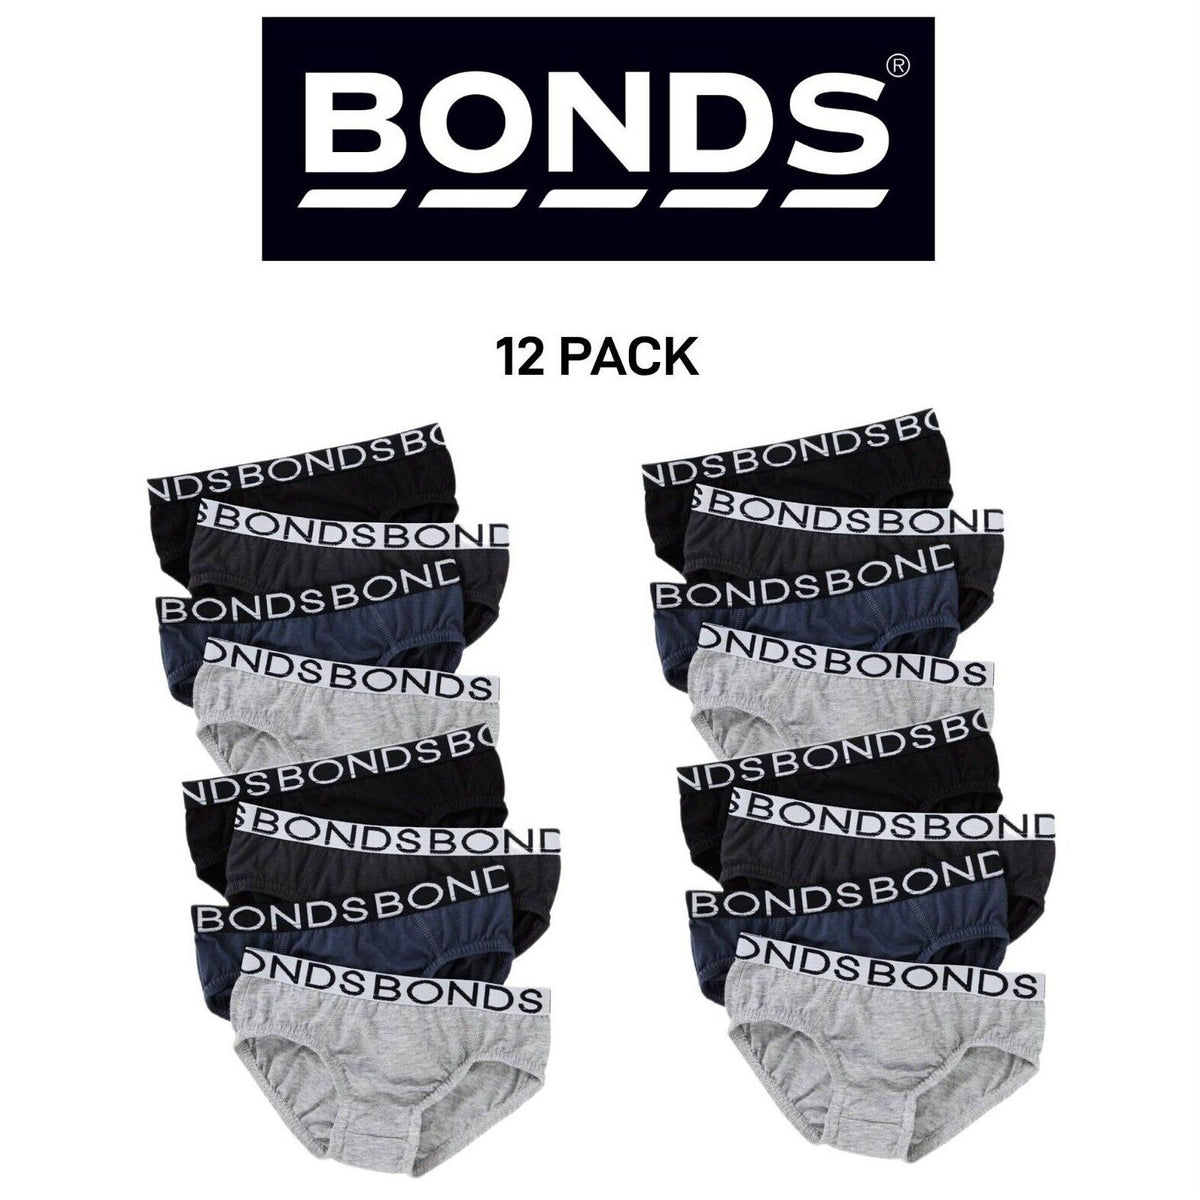 Bonds Boys Brief Underwear Breathable Cotton Rich Fabric 12 Pack UZW14A